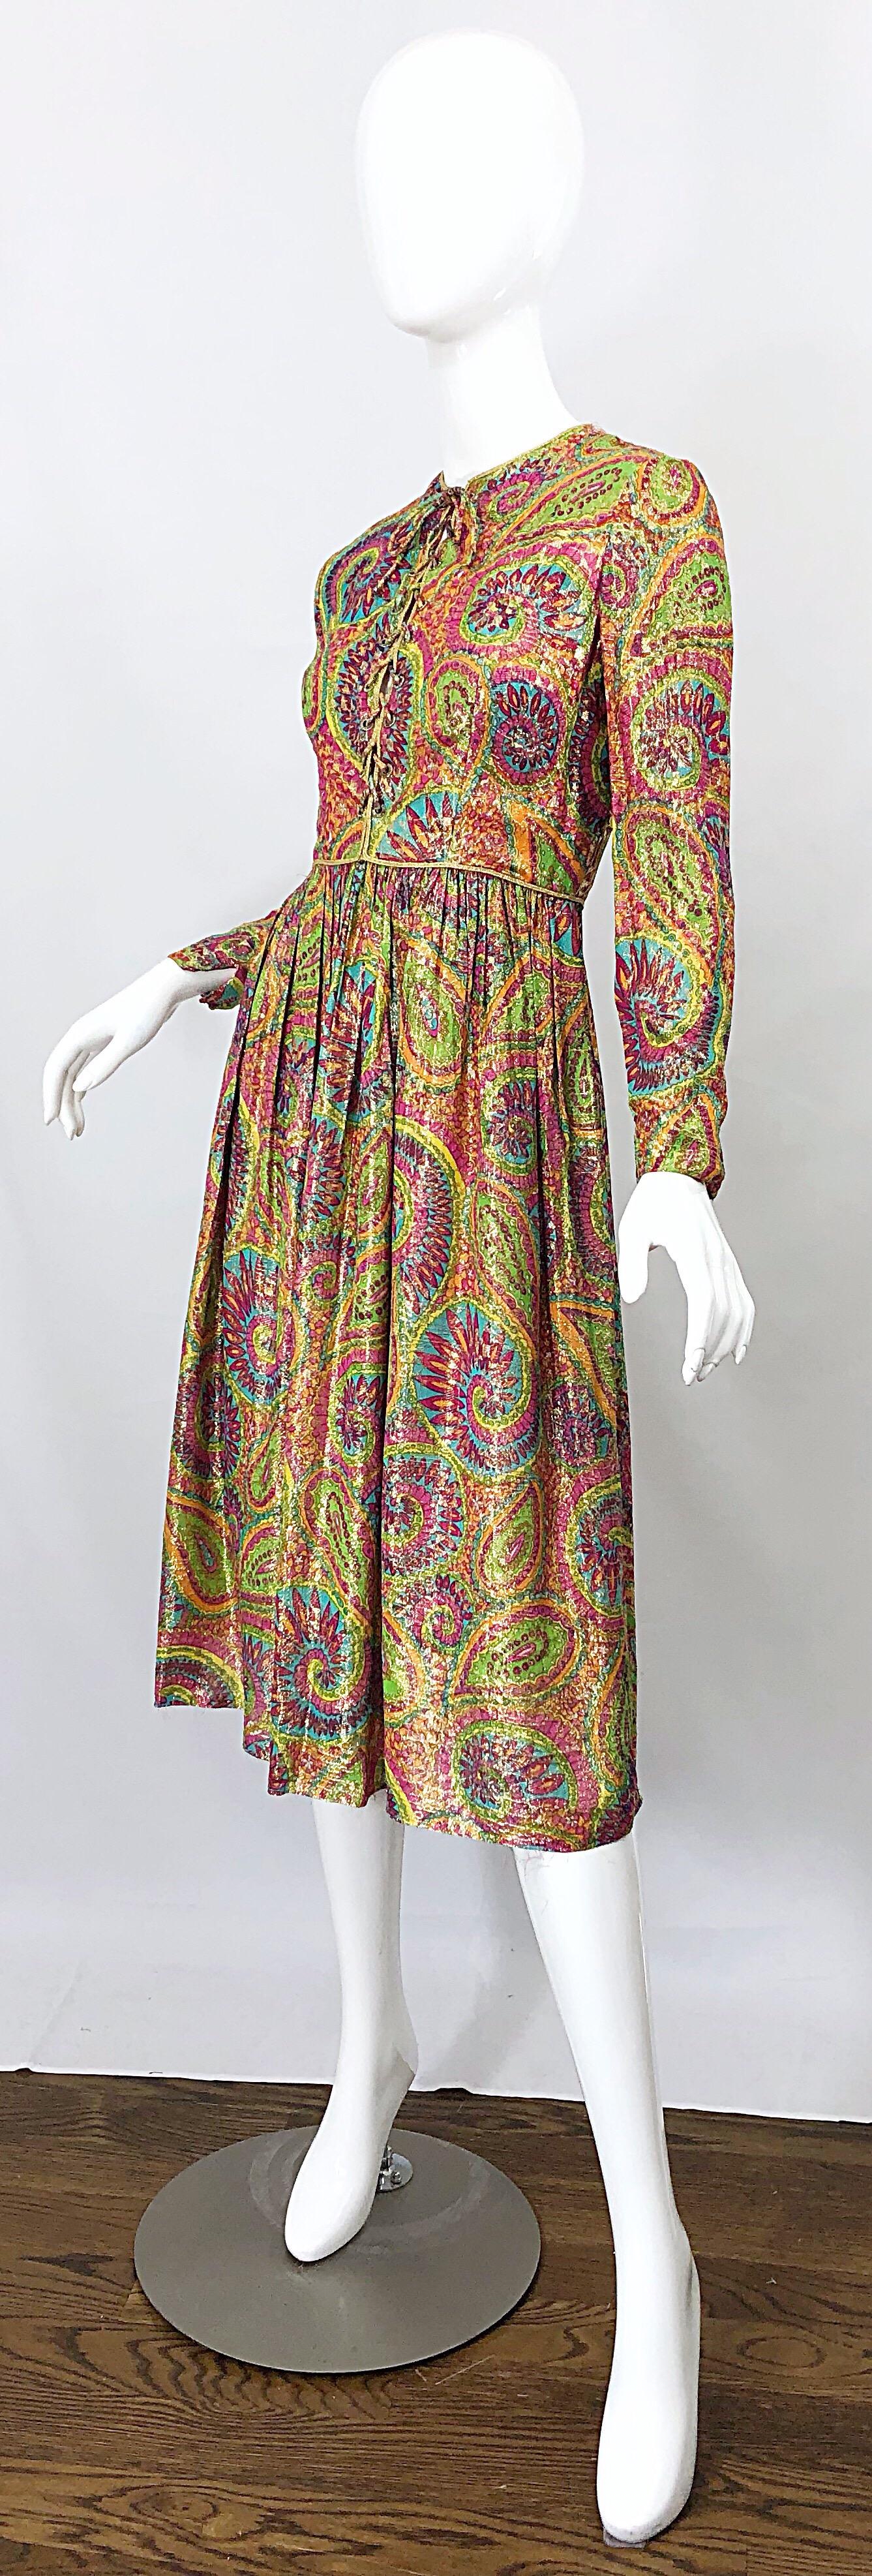 Mollie Parnis 1960s Silk Metallic Paisley Print Rhinestone Vintage 60s Dress For Sale 2